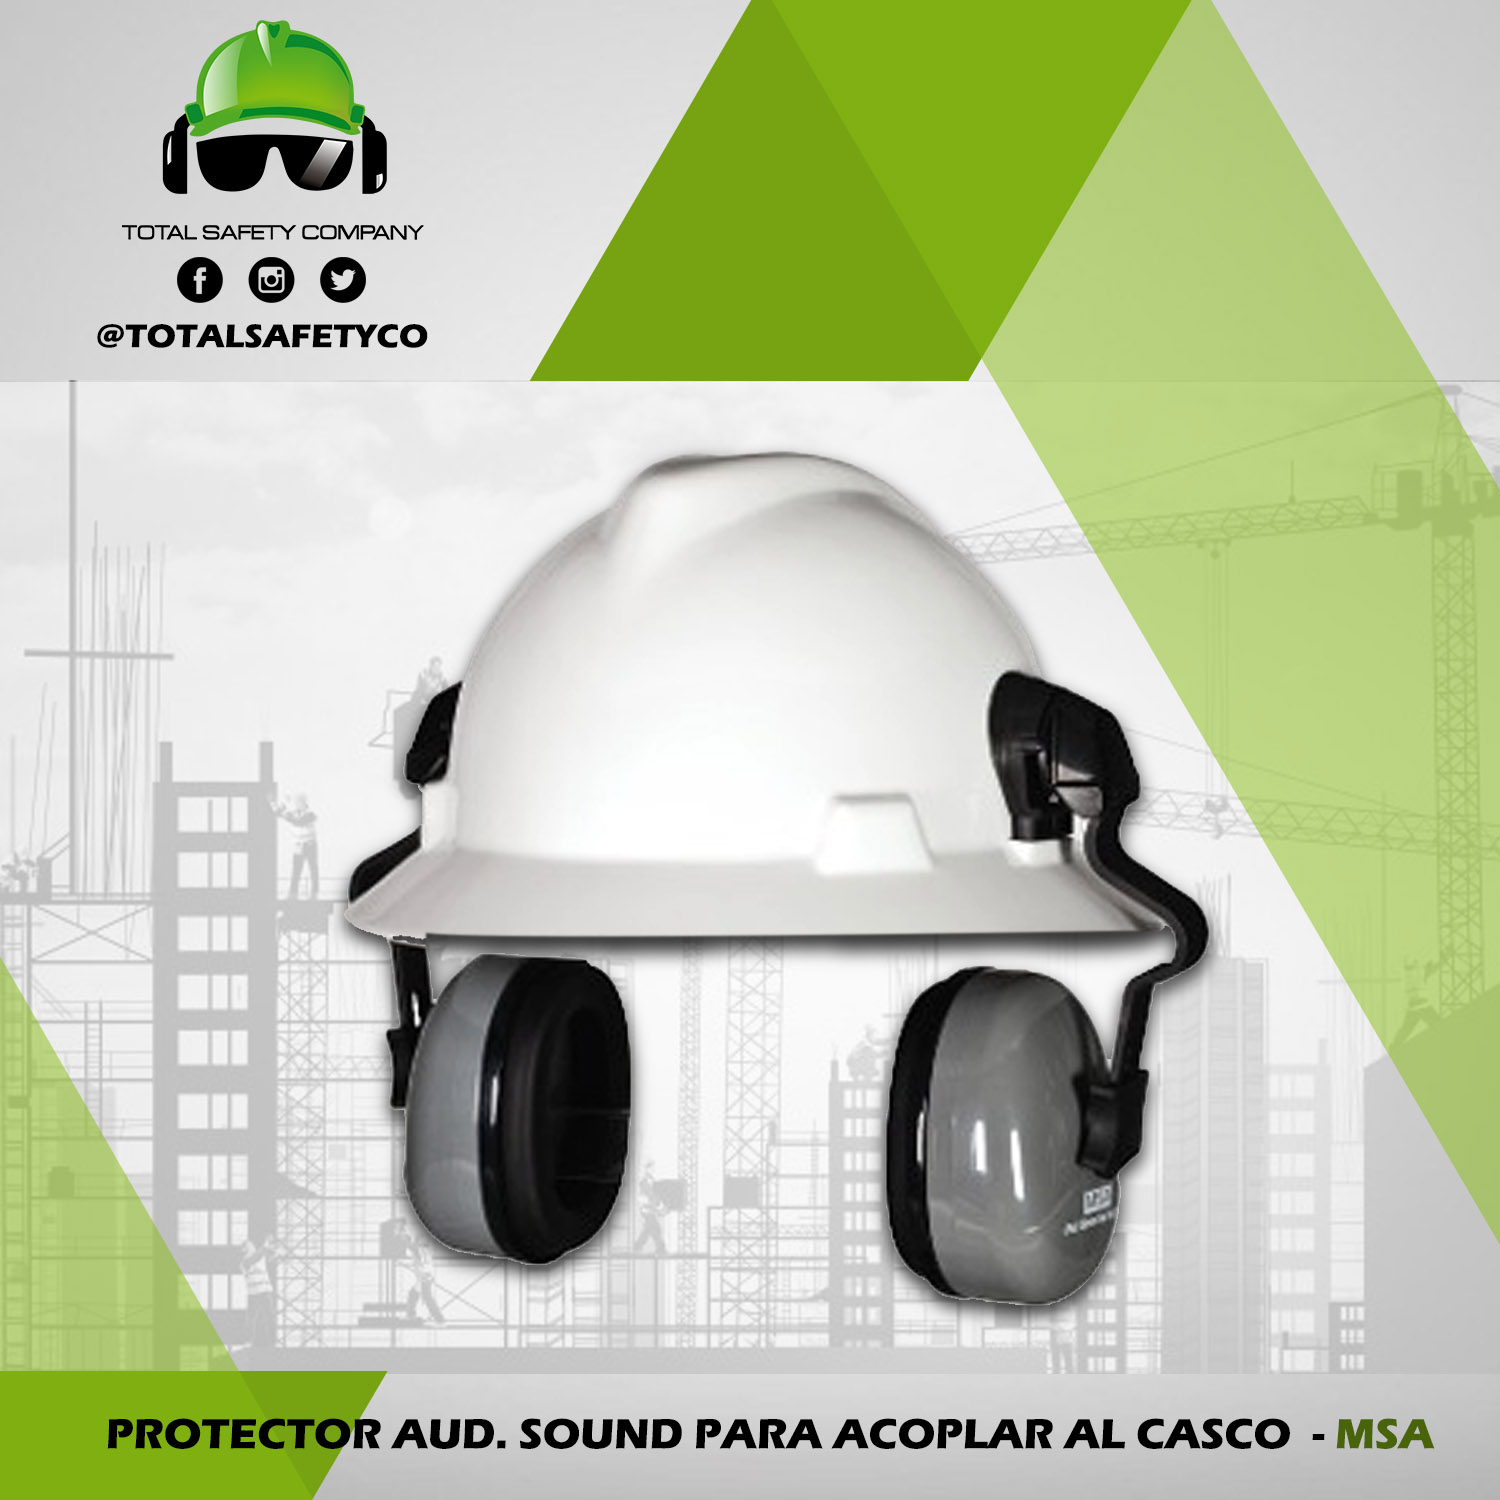 Protector aud. Sound para acoplar al casco - MSA